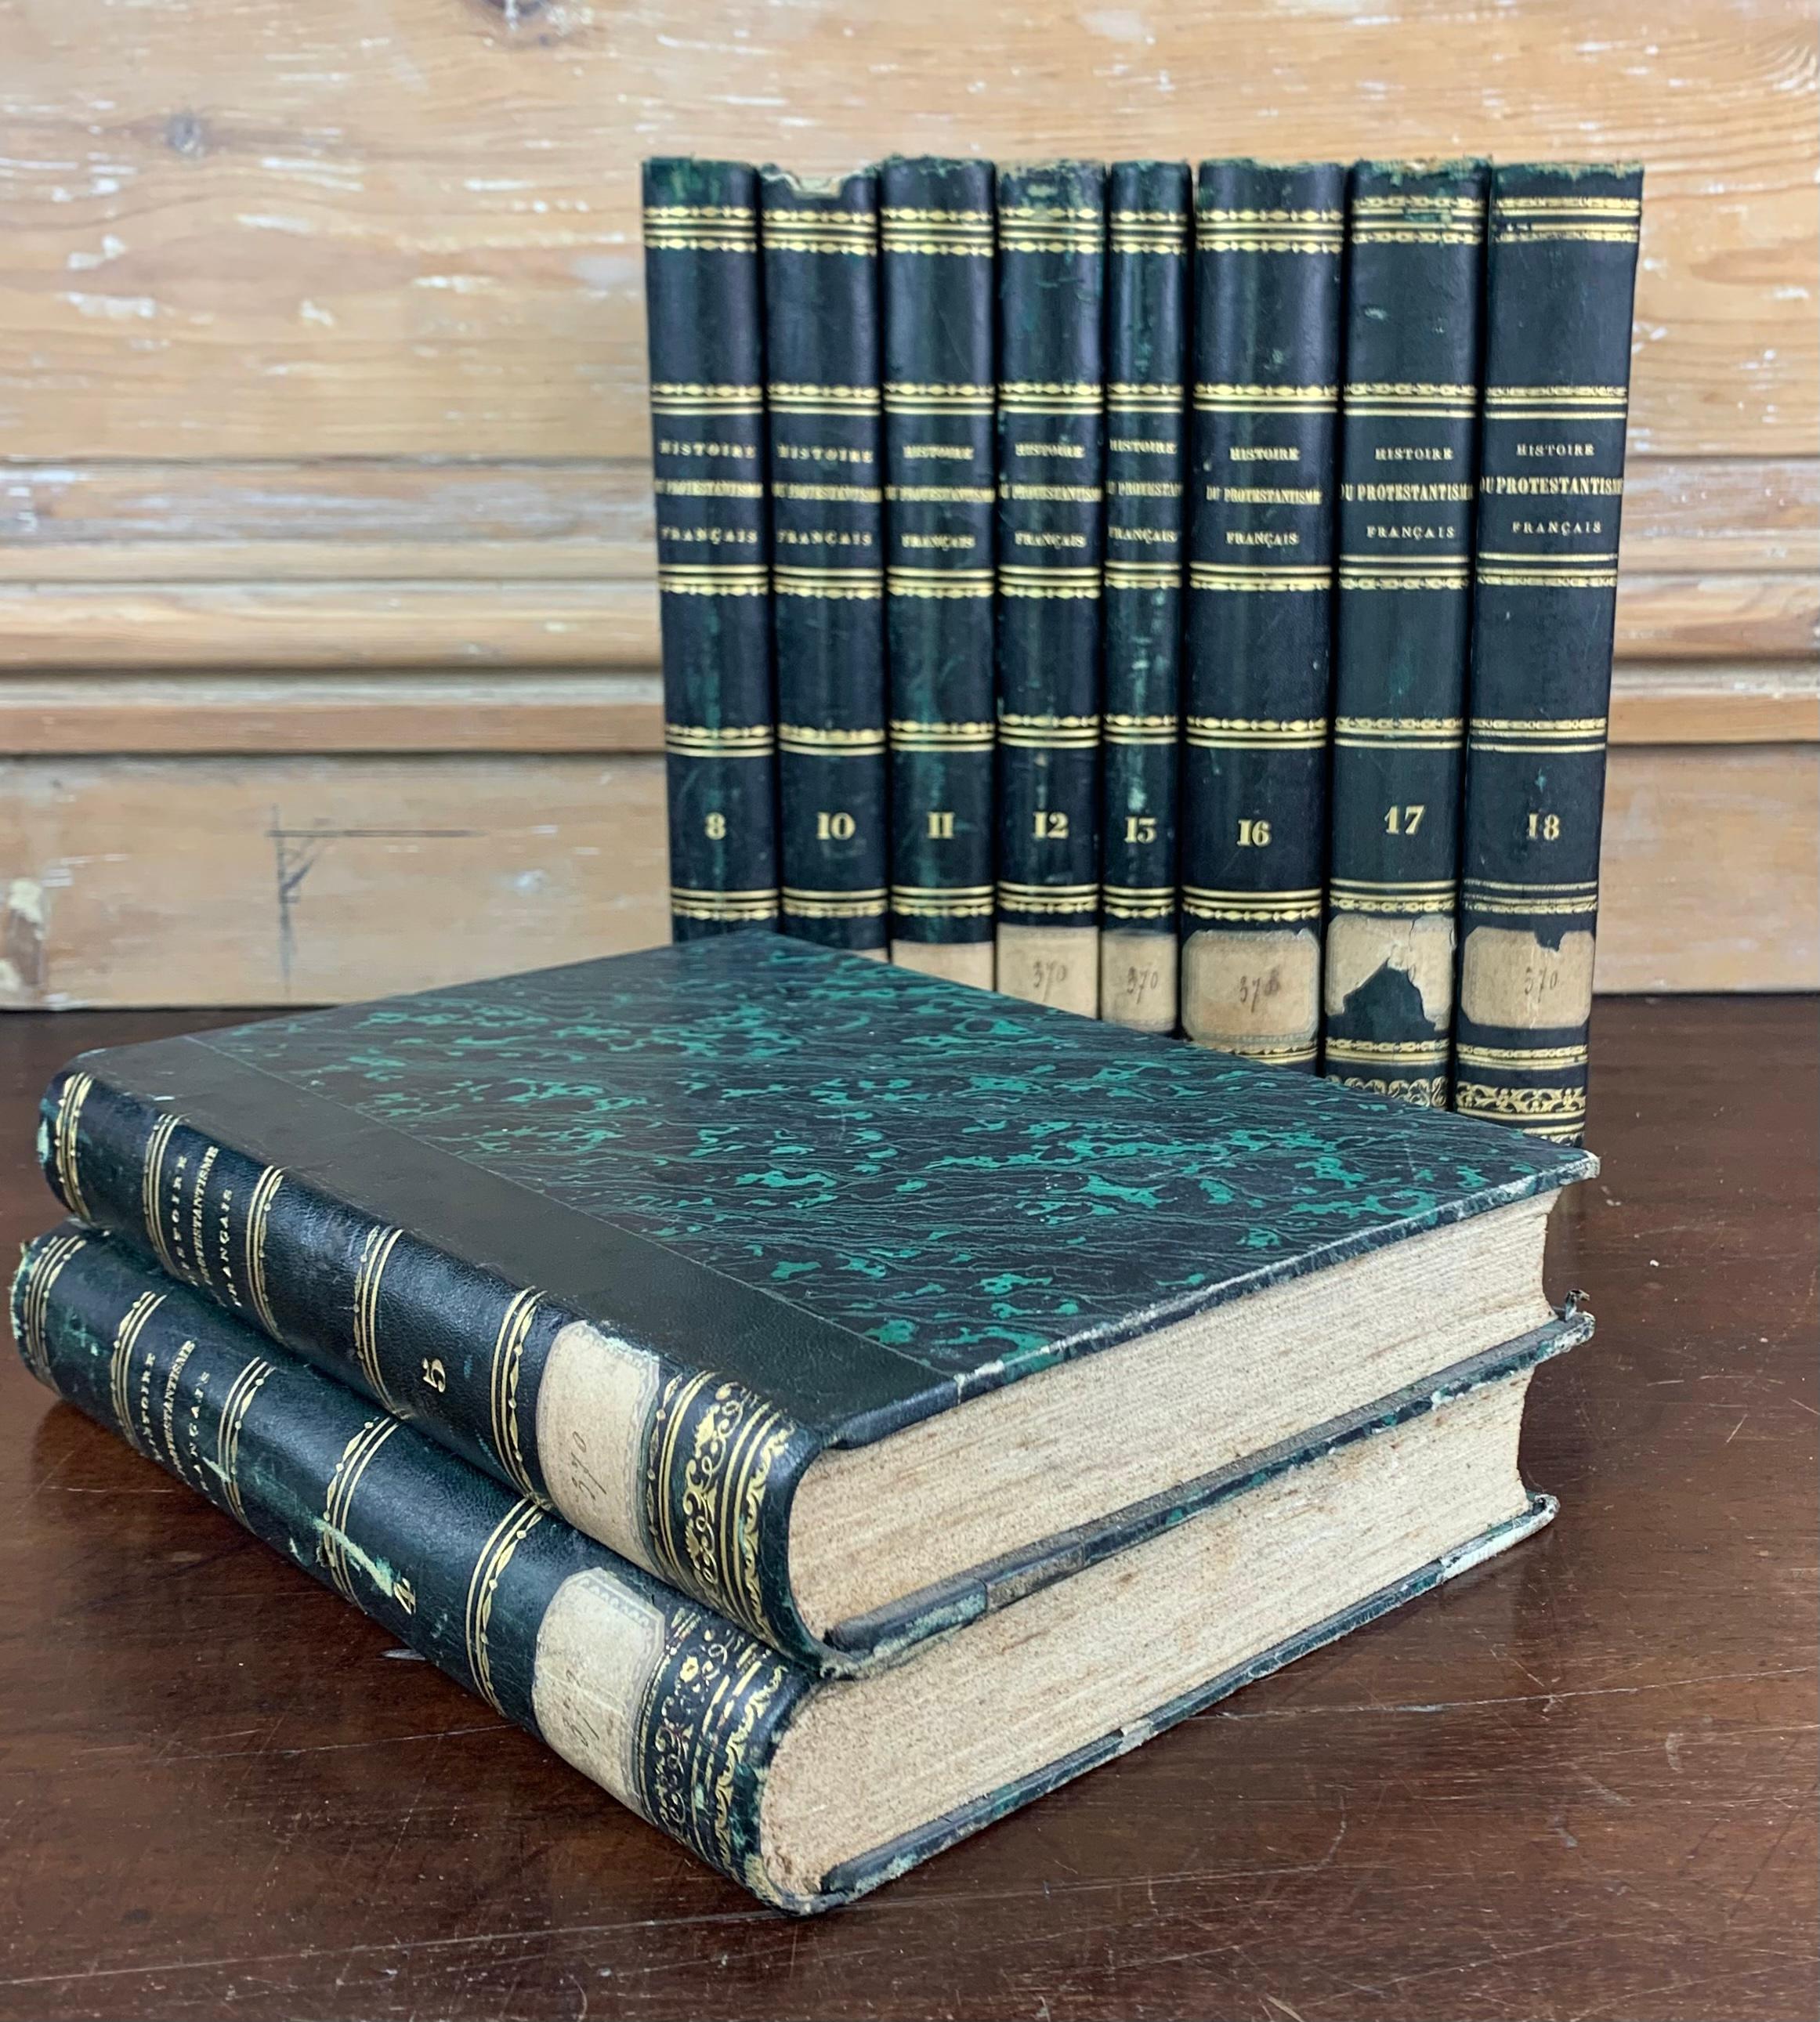 19th century books for sale